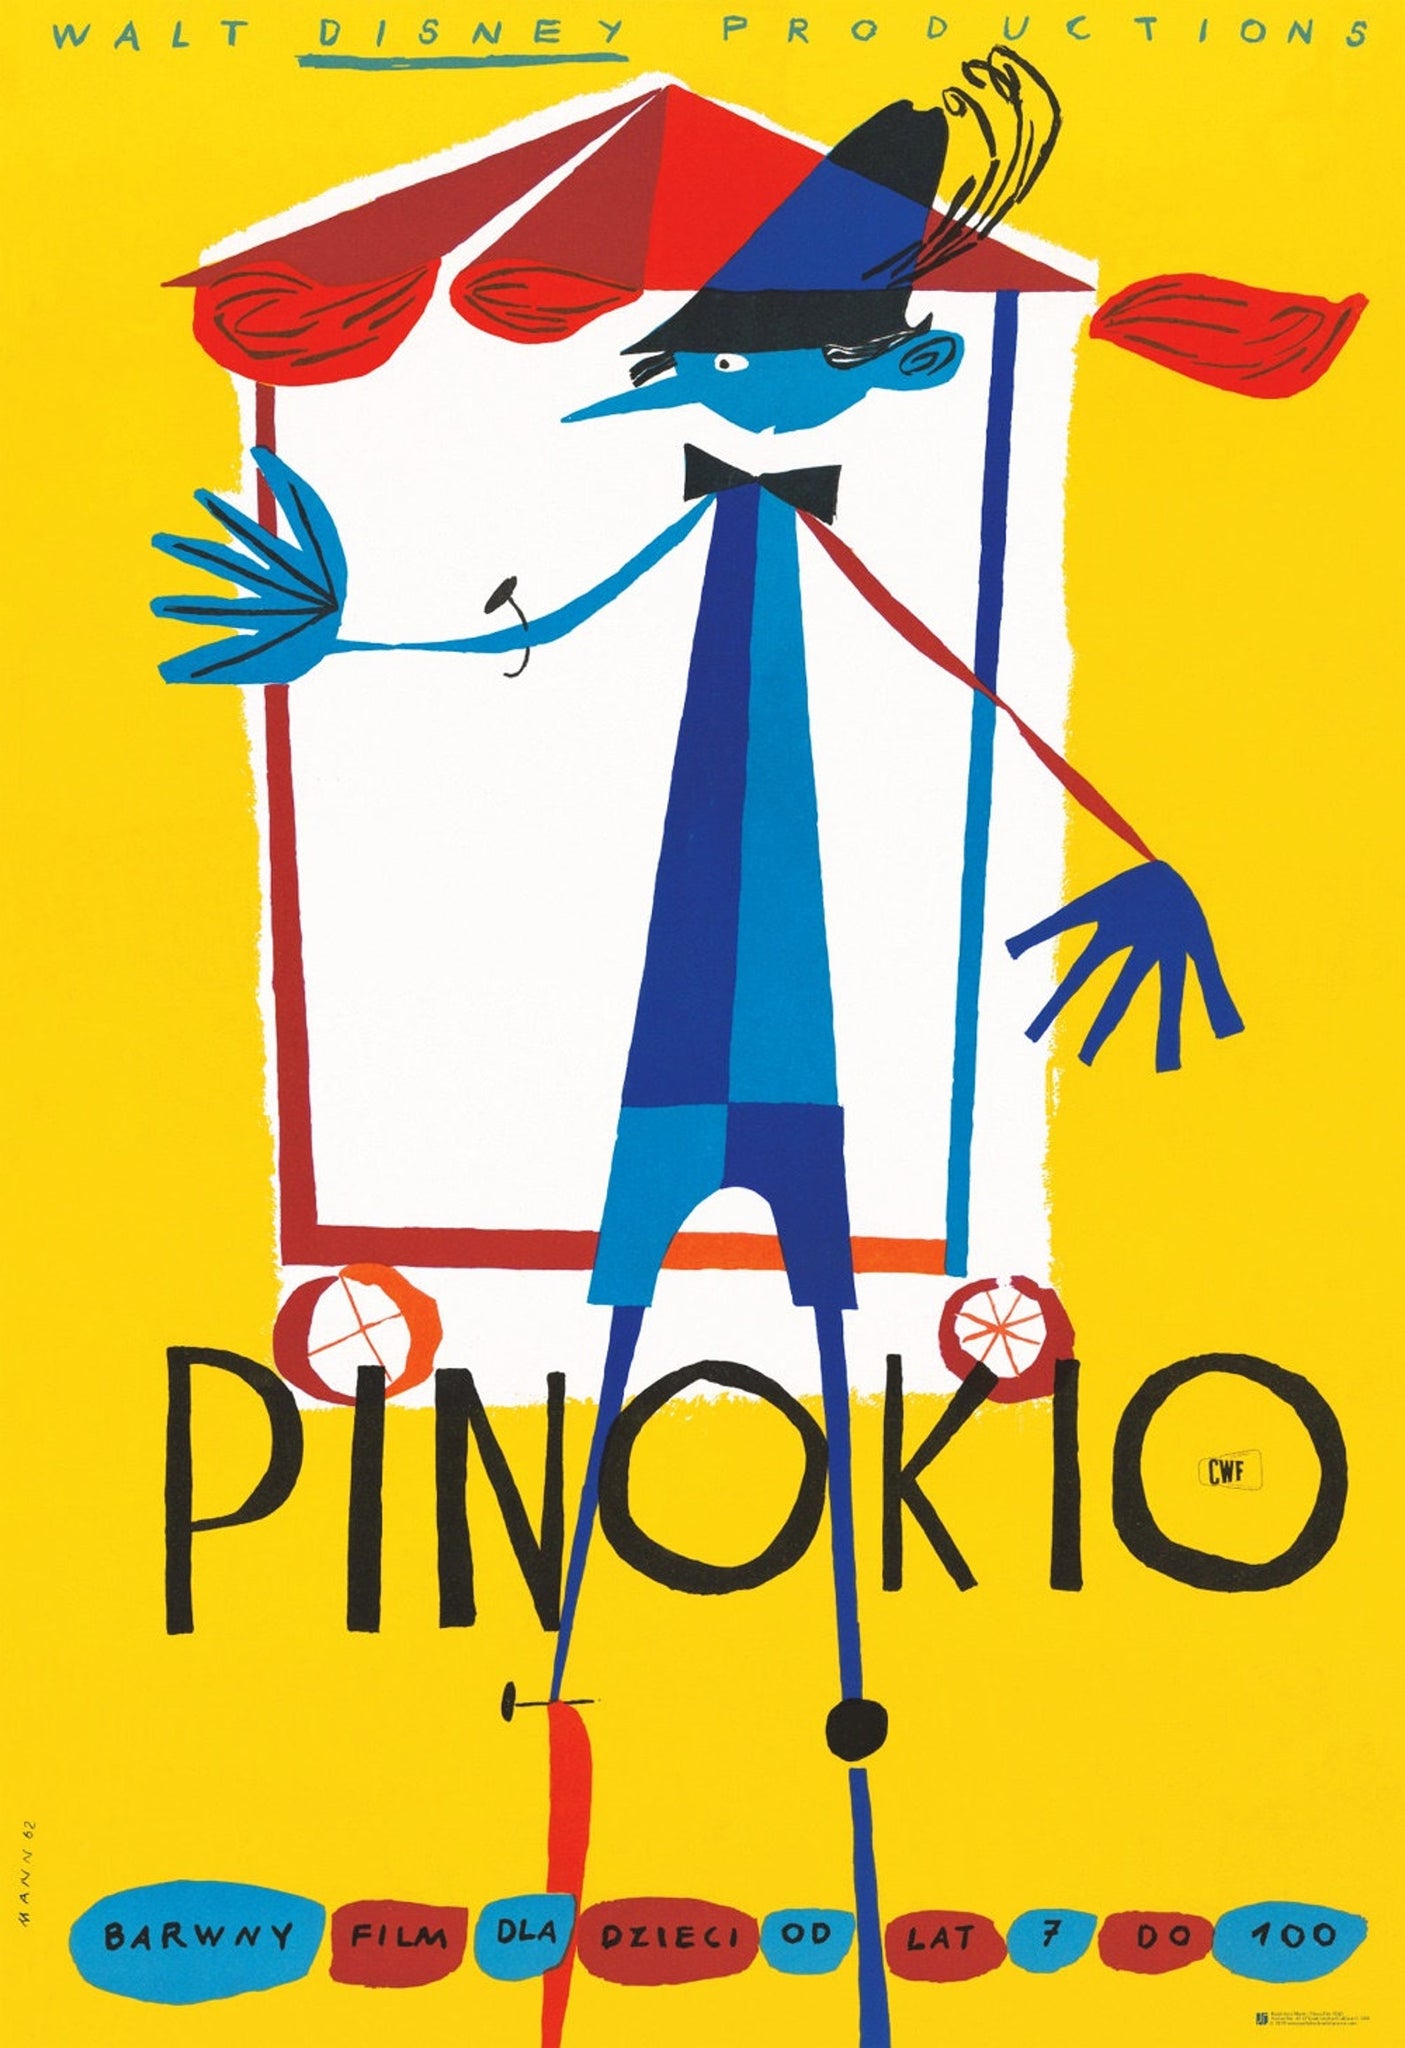 Pinocchio Polish Movie Art Poster Reprint